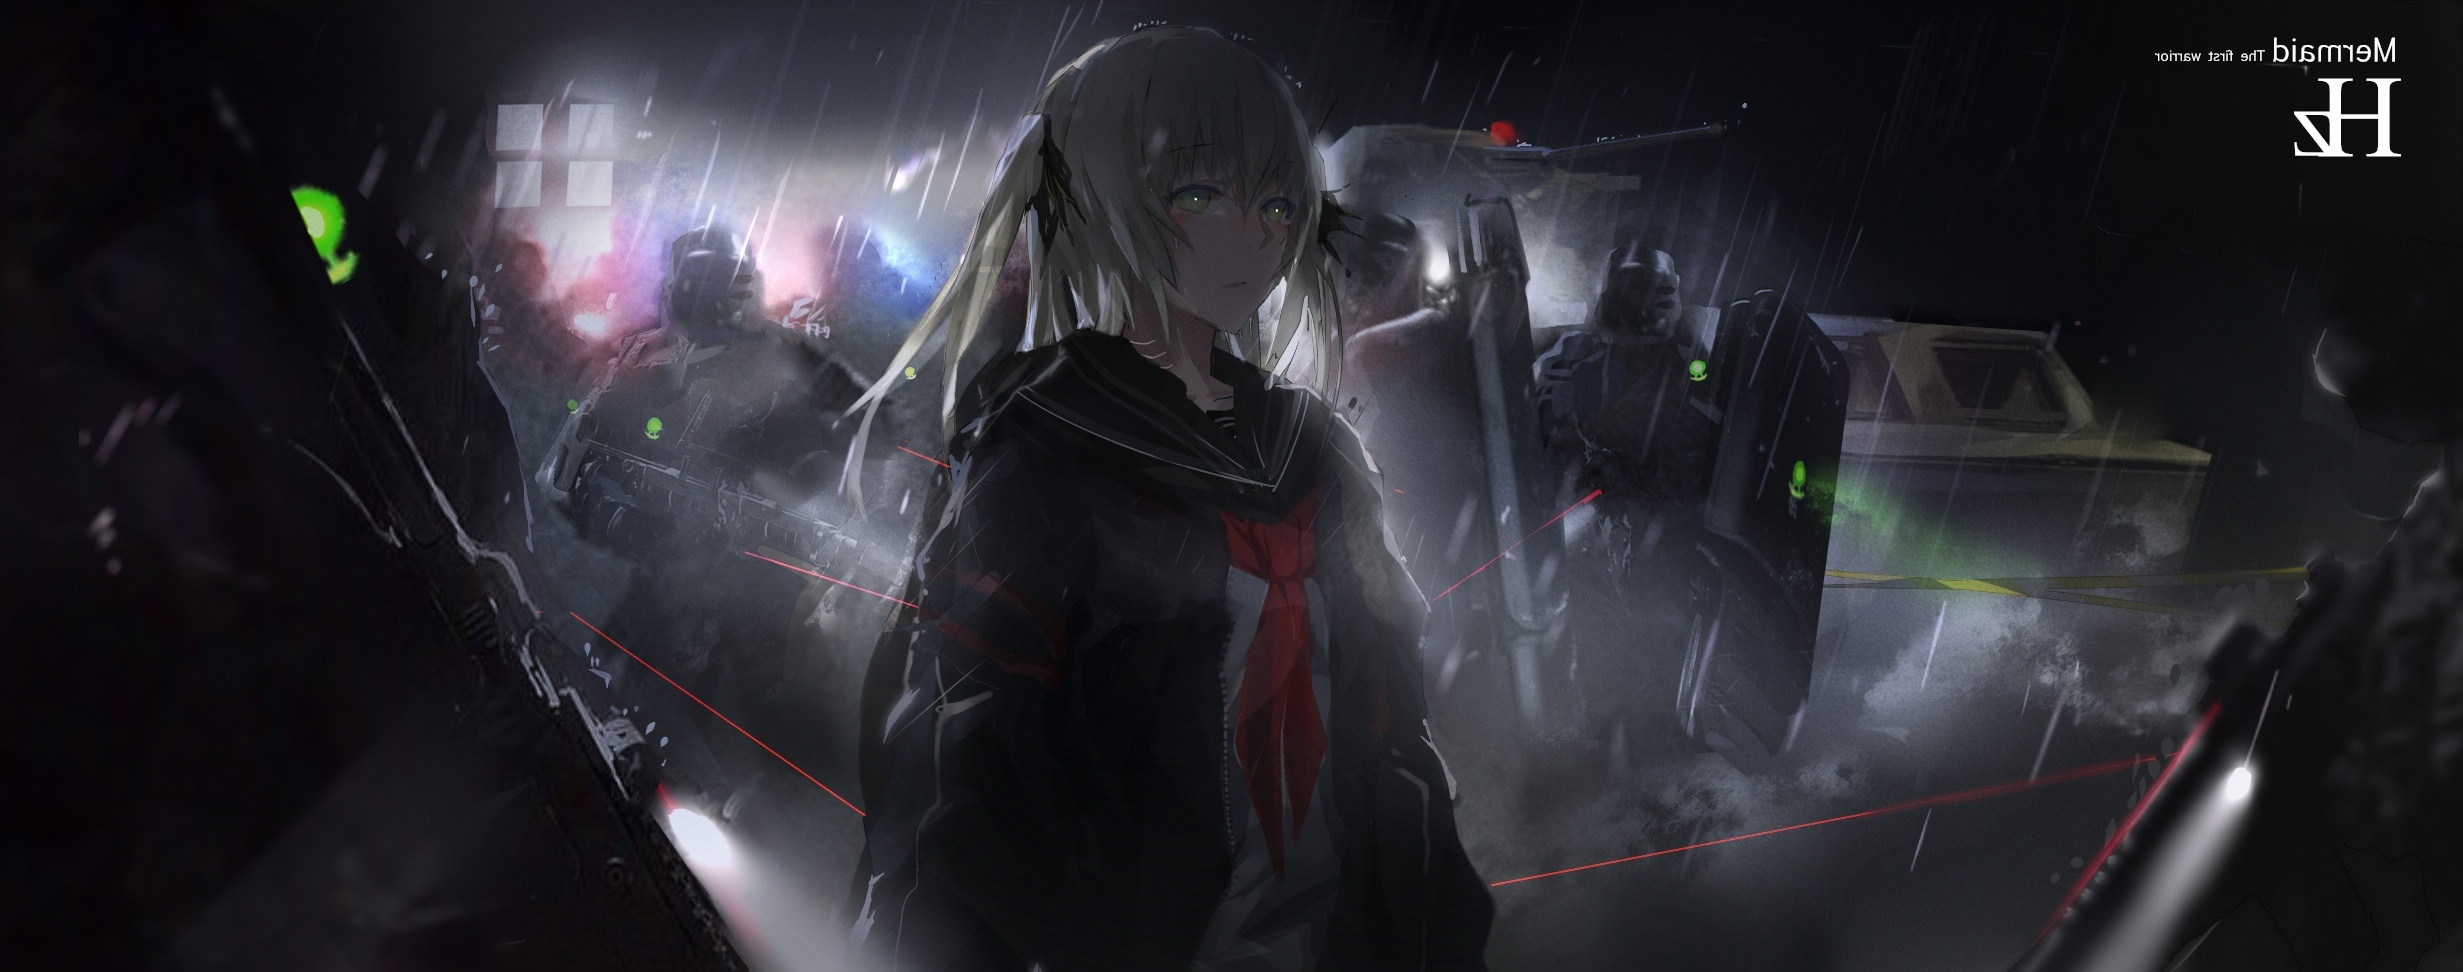 Wallpaper Soldiers, Anime Girl, Guns, Raining, Dark Theme:2463x972